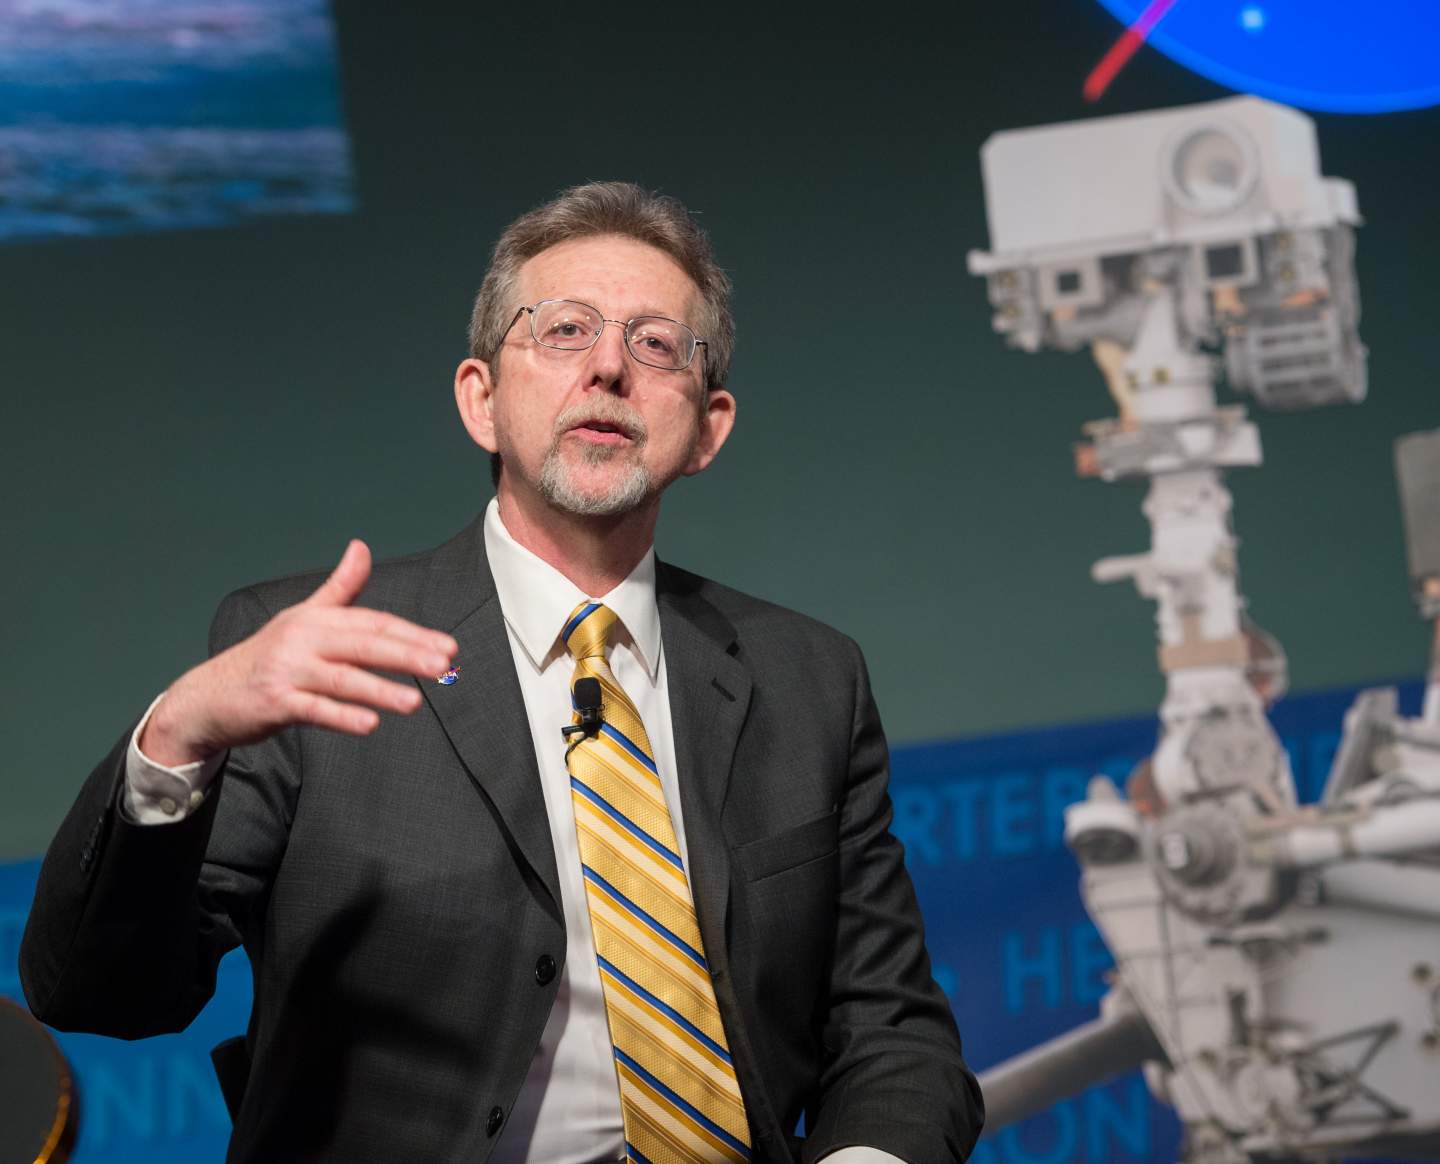 Recently retired NASA chief scientist, Jim Green